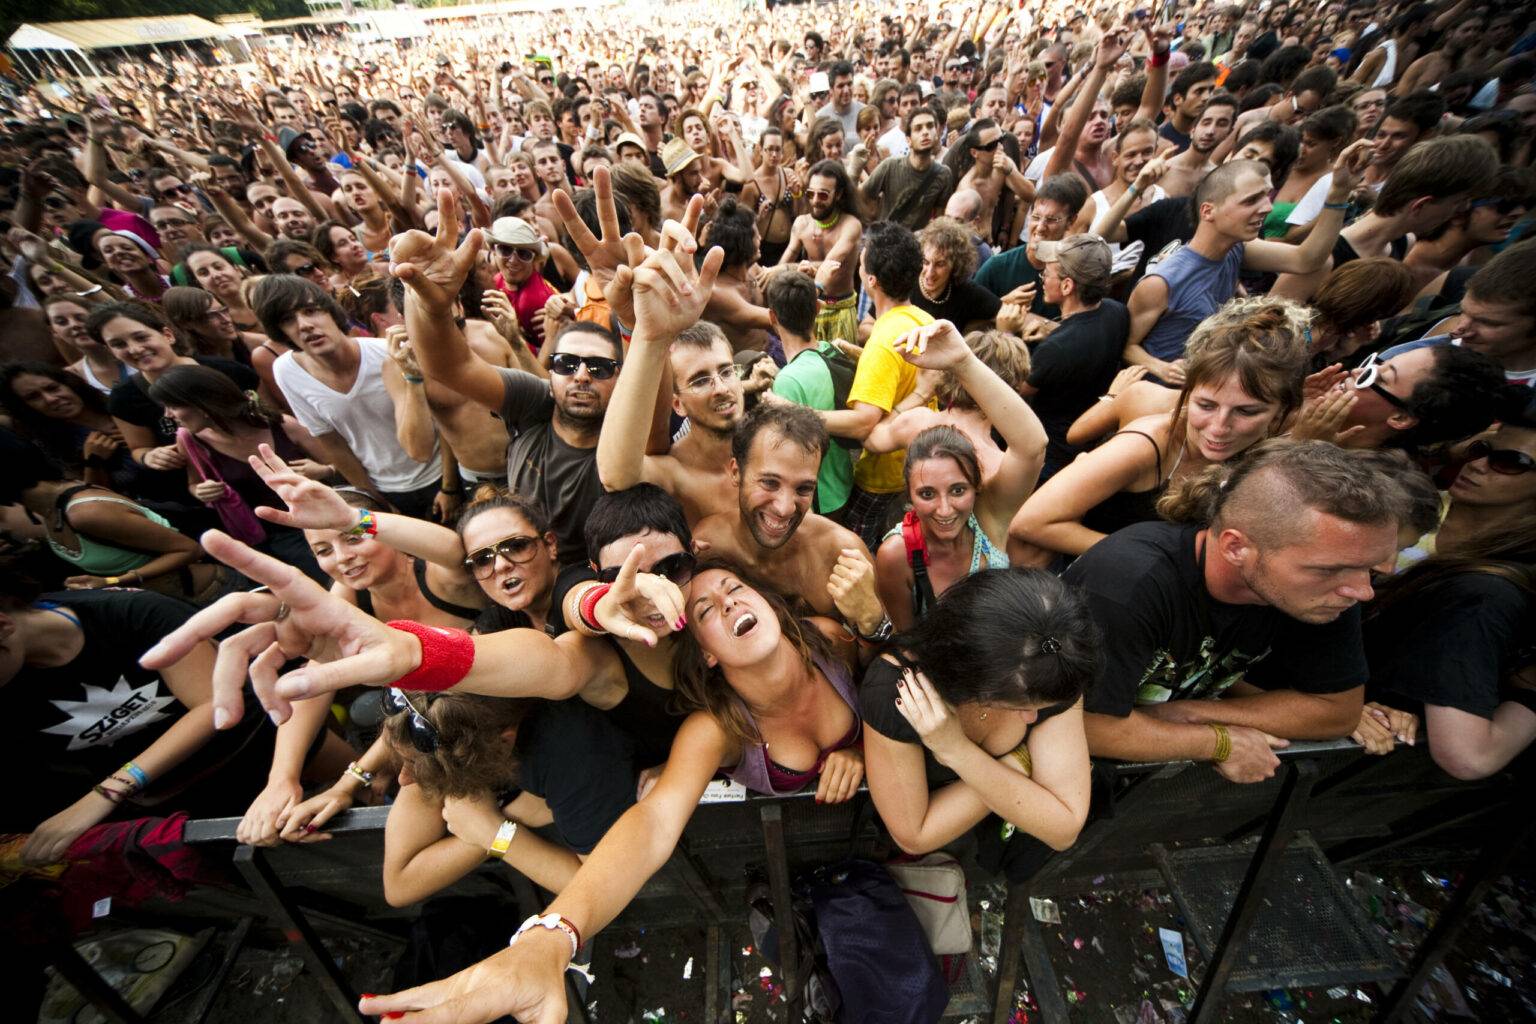 Totale Ekstase - bei Rock in Rio feiern die Fans ihre Rockidole.